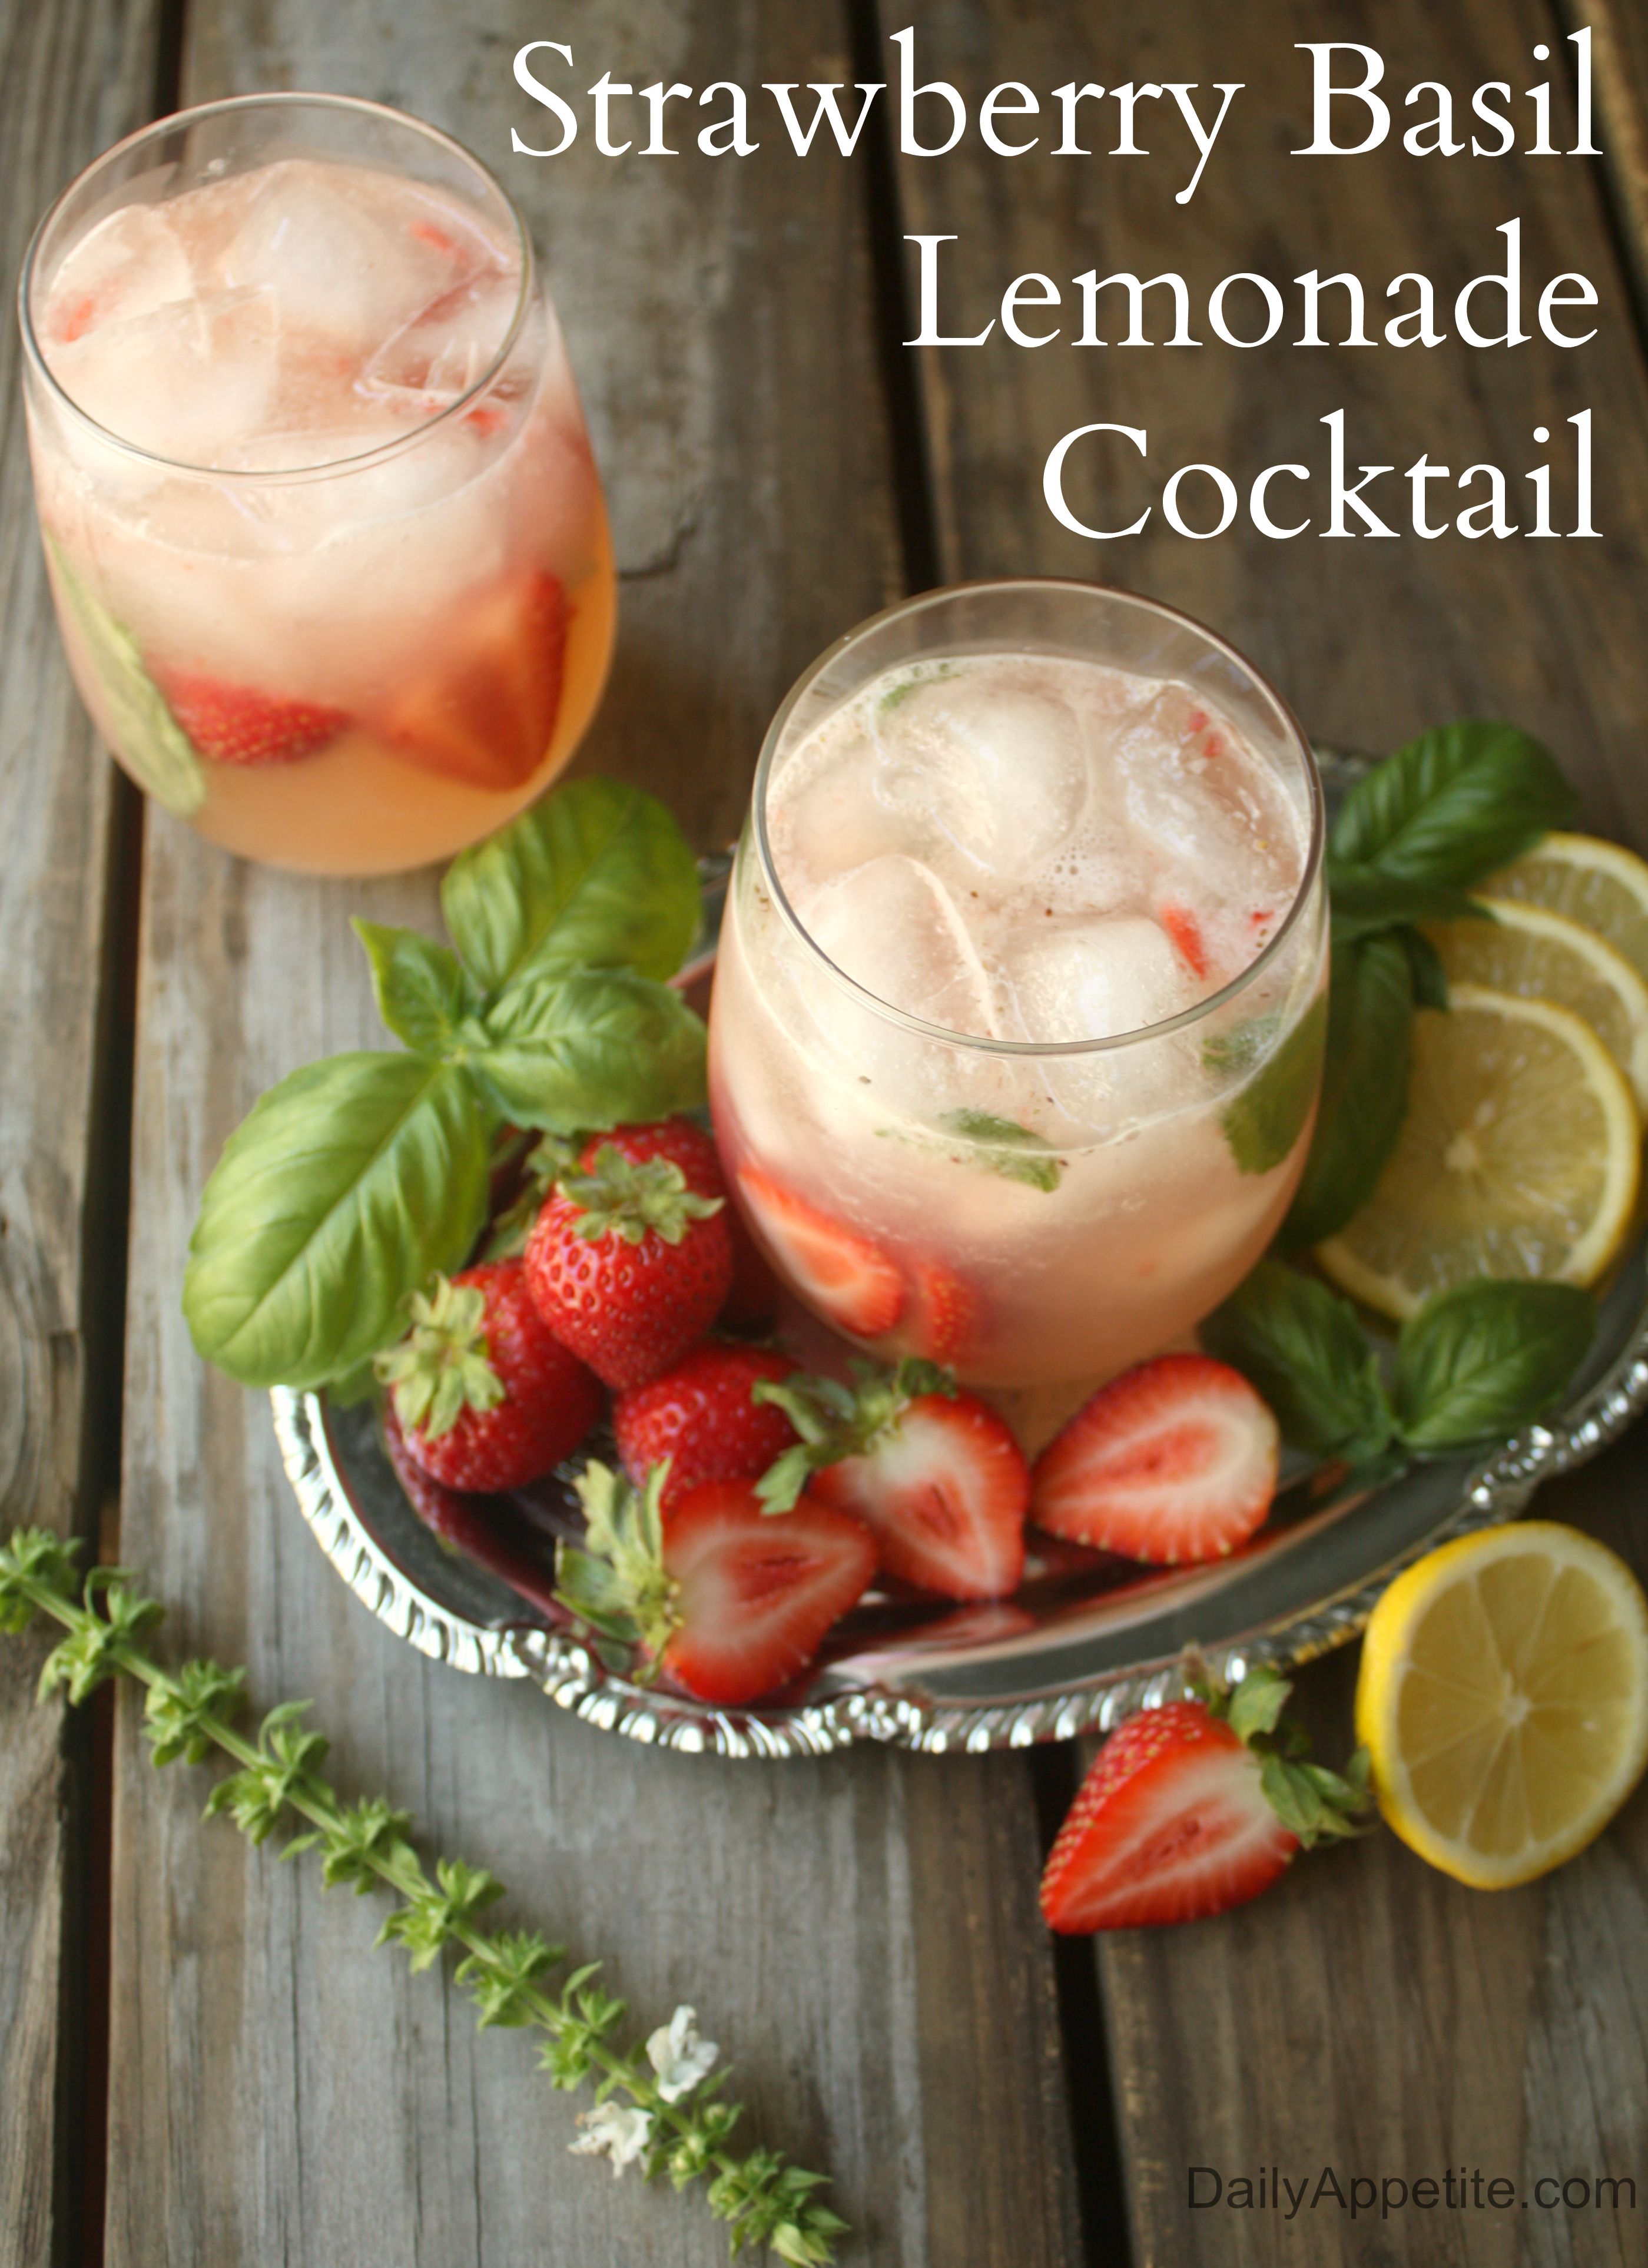 Strawberry Basil Lemondae Cocktail made with Citron